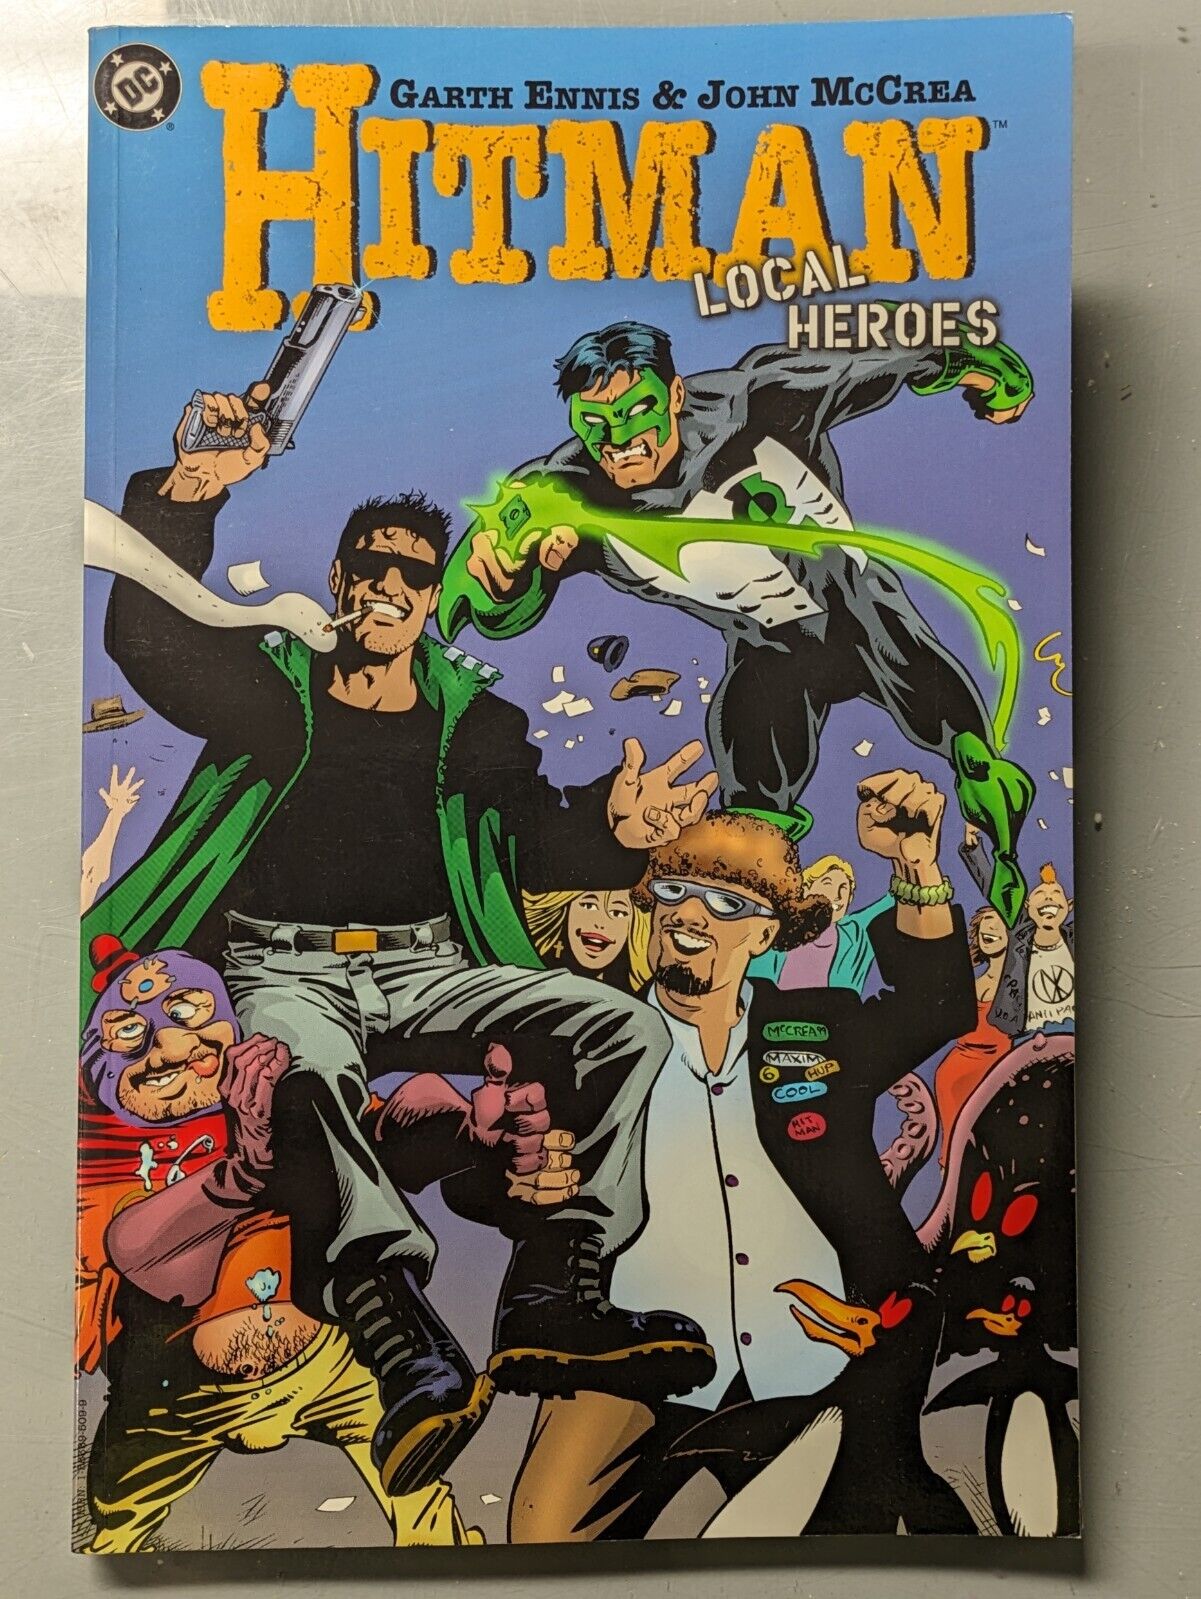 1997 Hitman Volume 3 Local Heroes TPB Trade Paperback Graphic Novel Garth Ennis